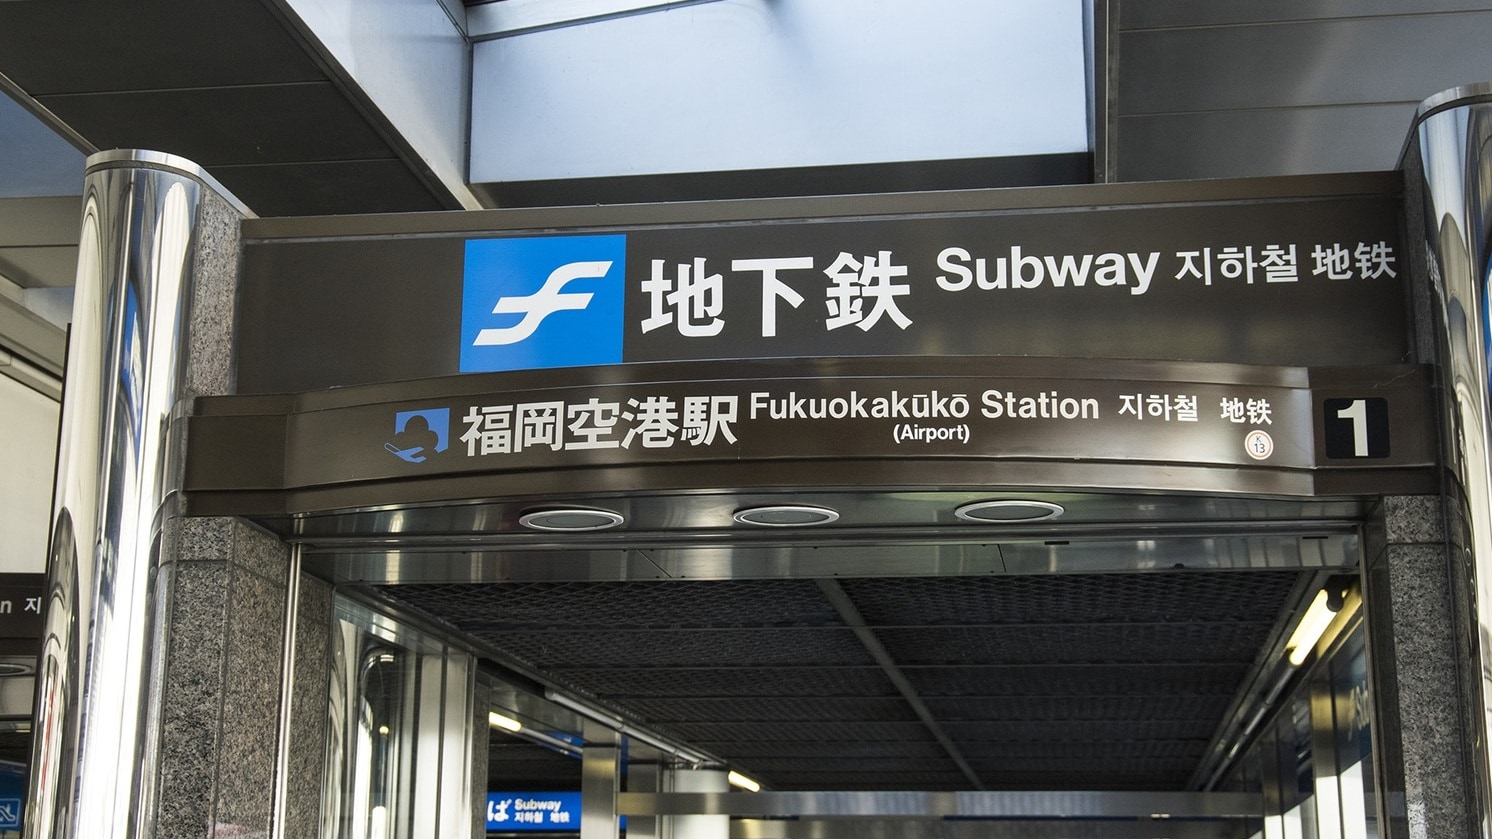 Fukuoka Airport / Subway Entrance